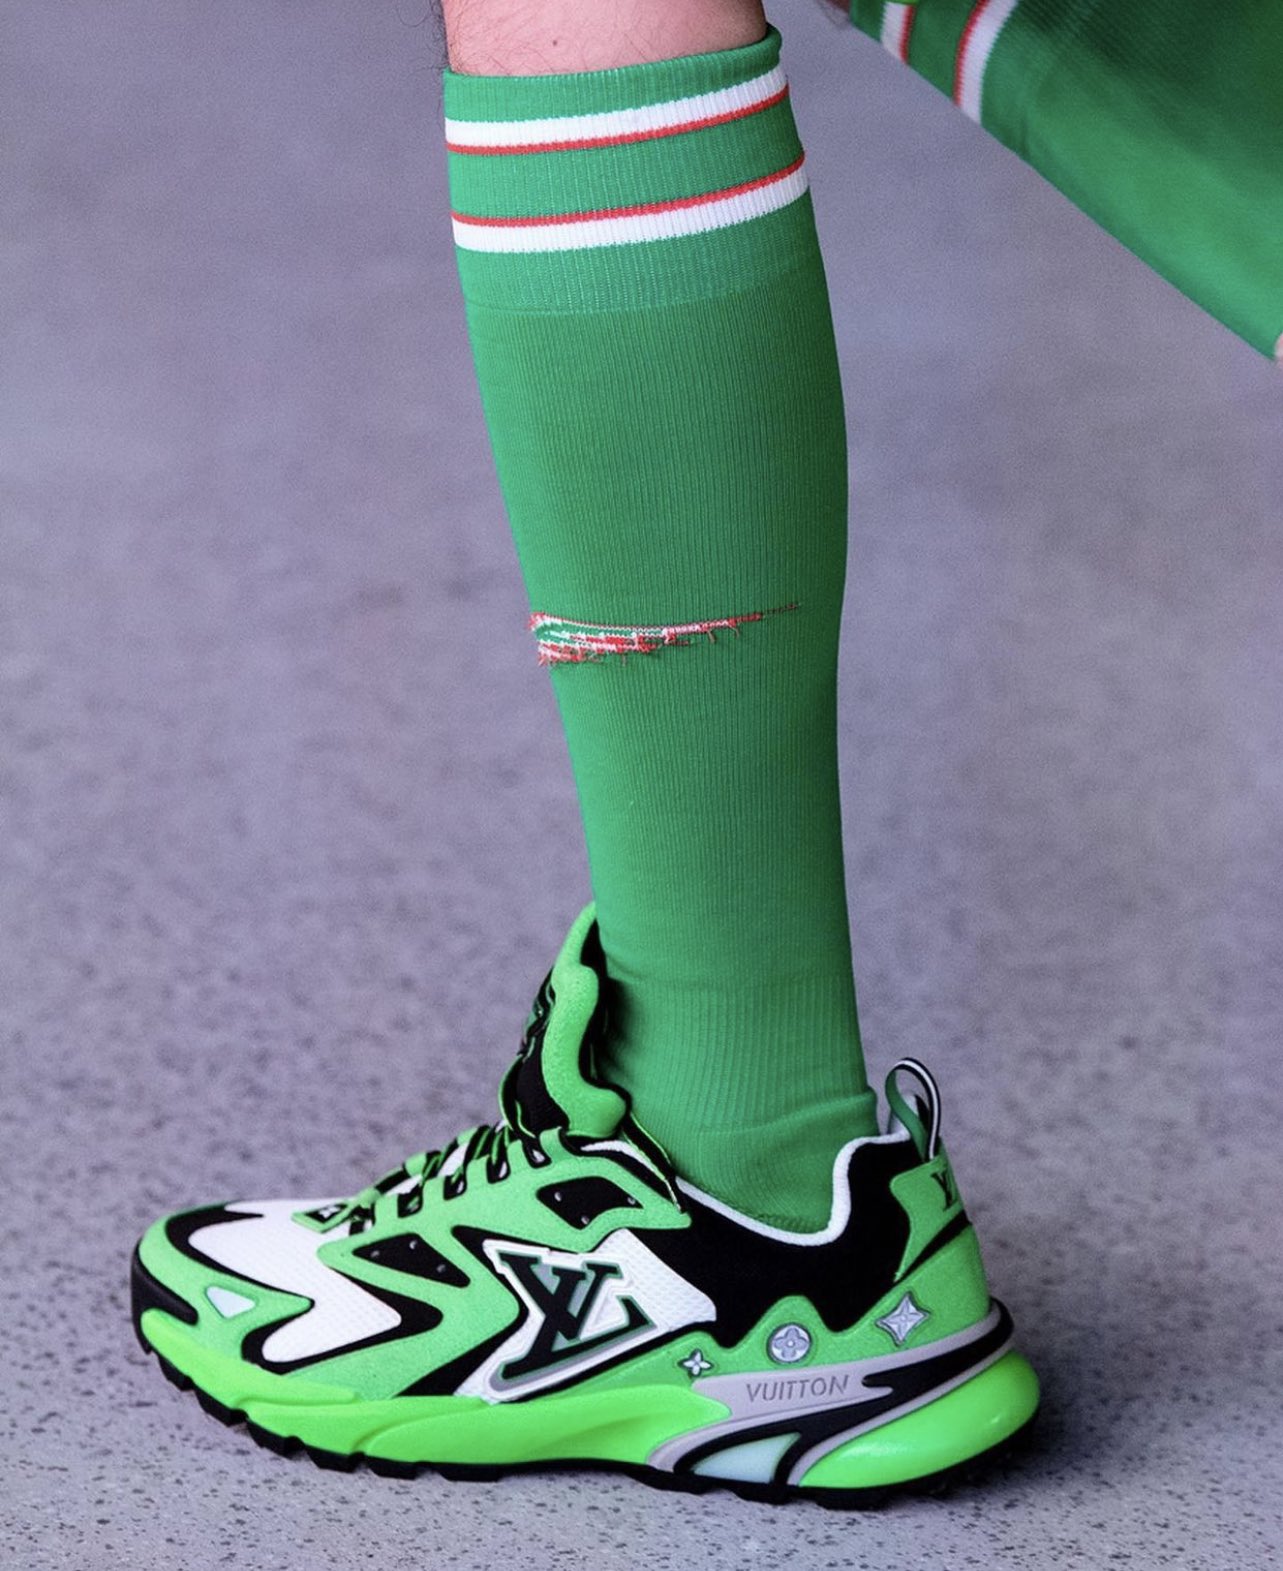 louis vuitton socks green